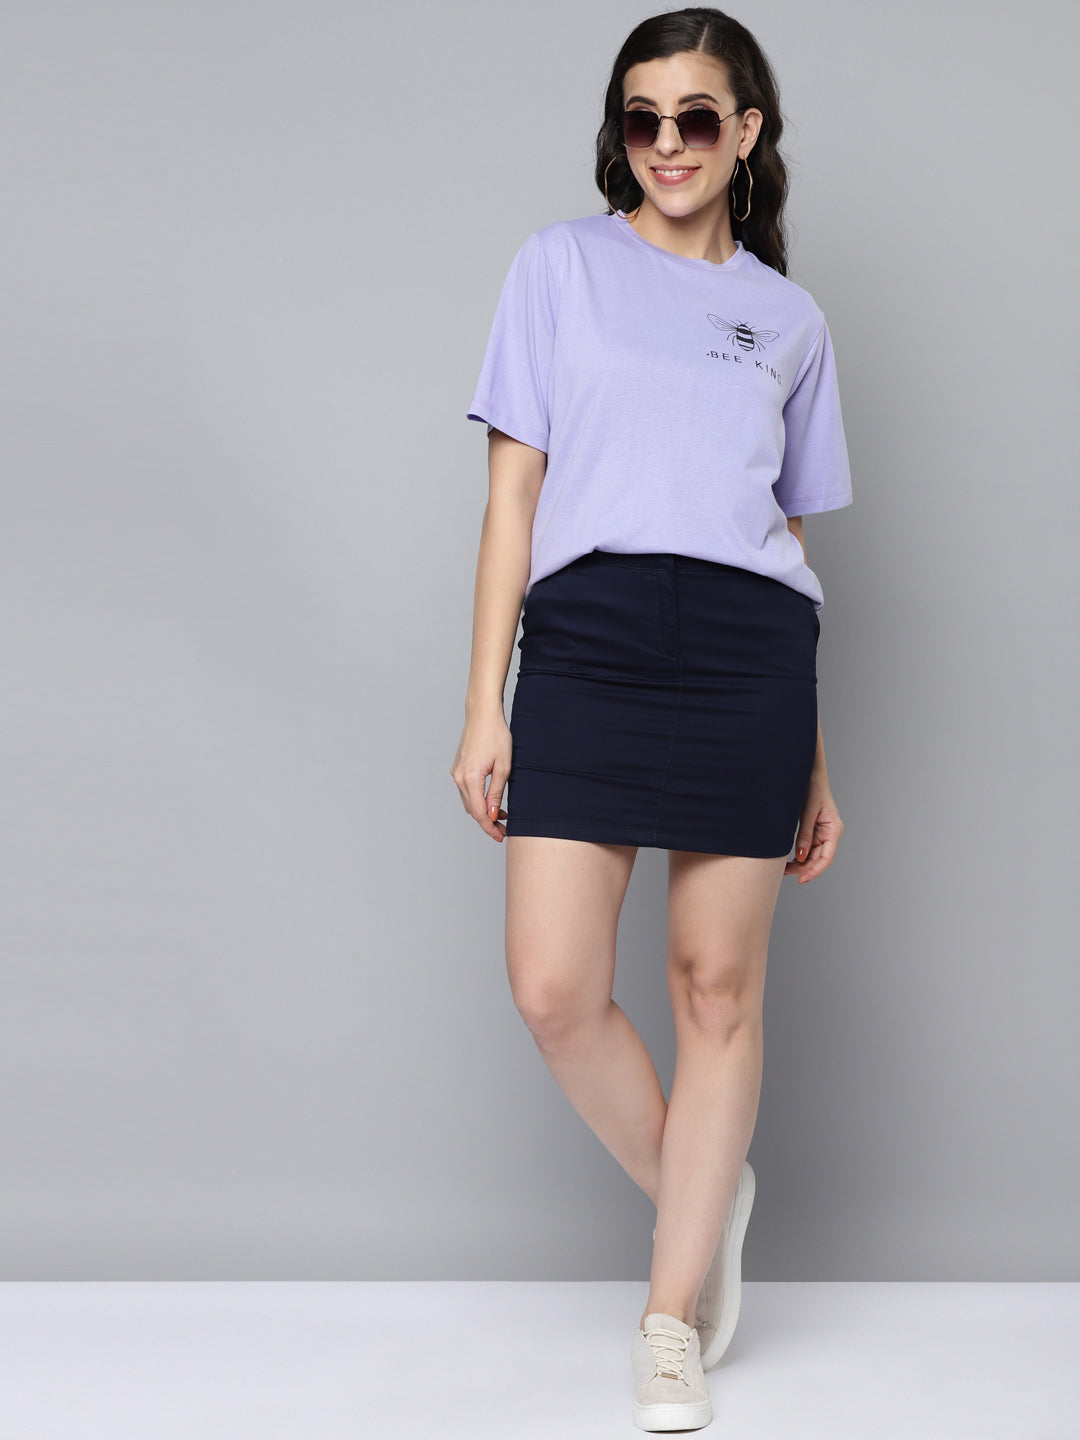 Women Lavender BEE KIND Regular T-Shirt